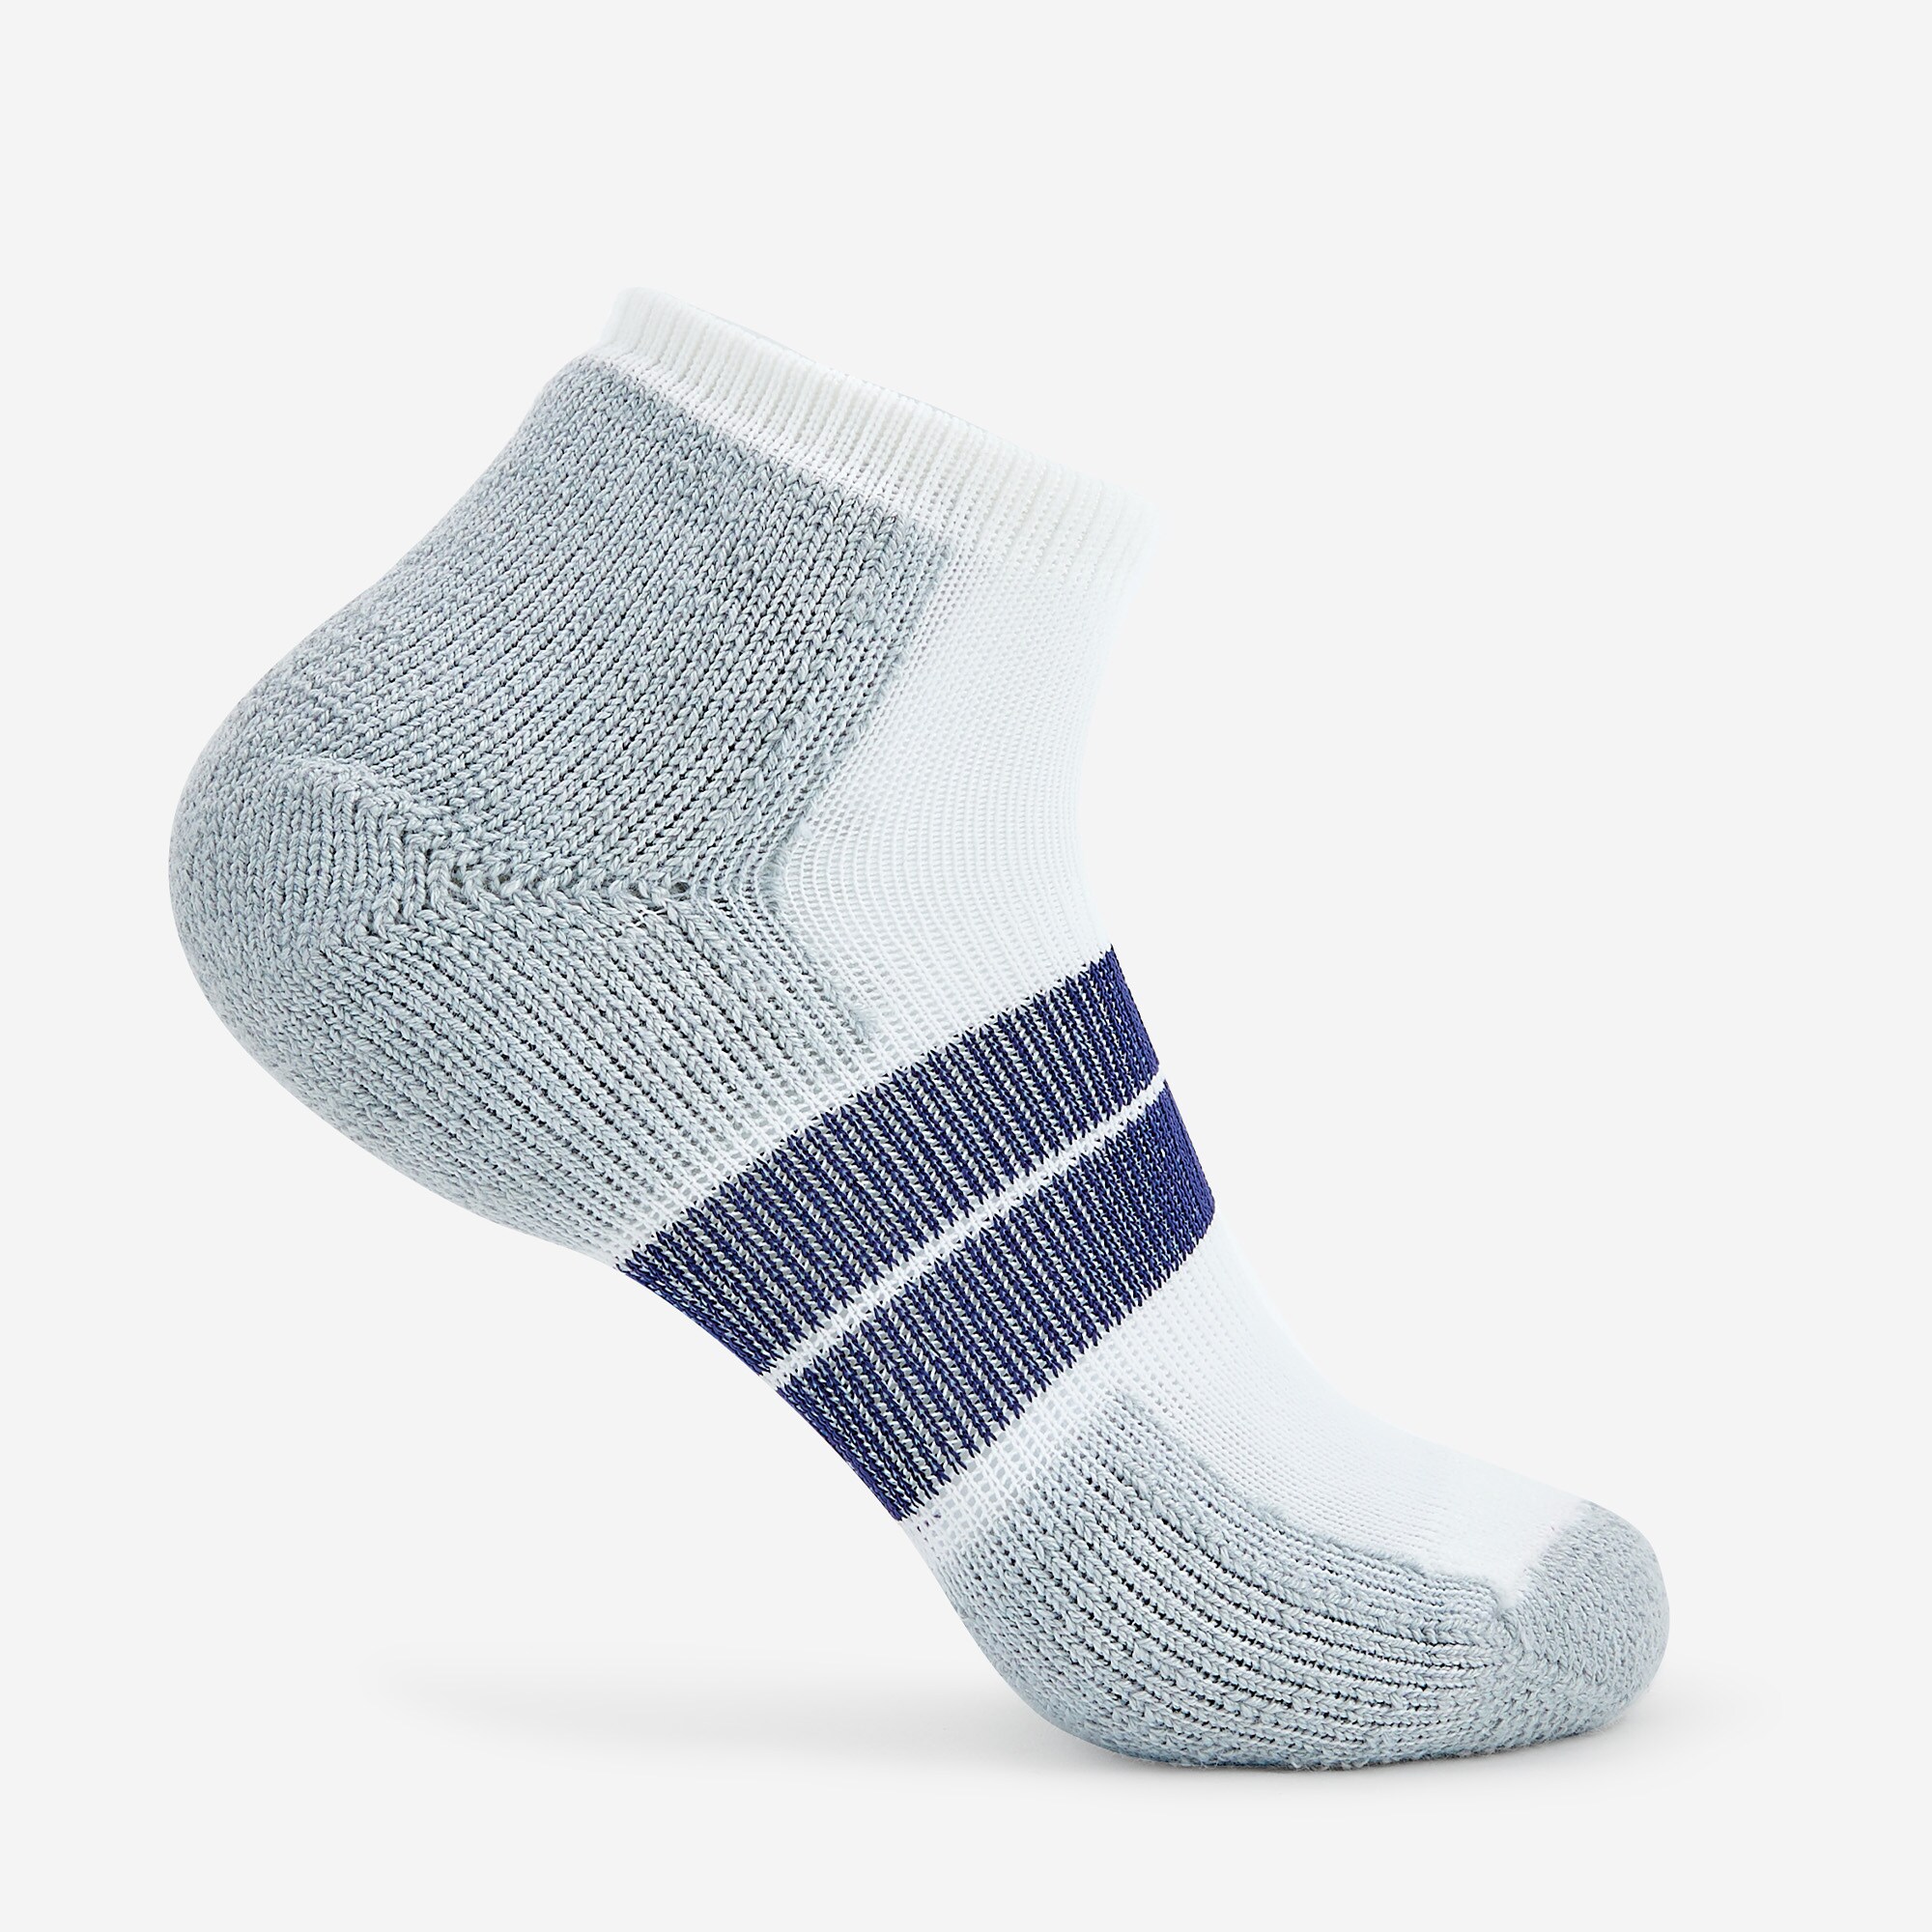 Thorlo Men's Acrylic Ankle Socks at Lowes.com